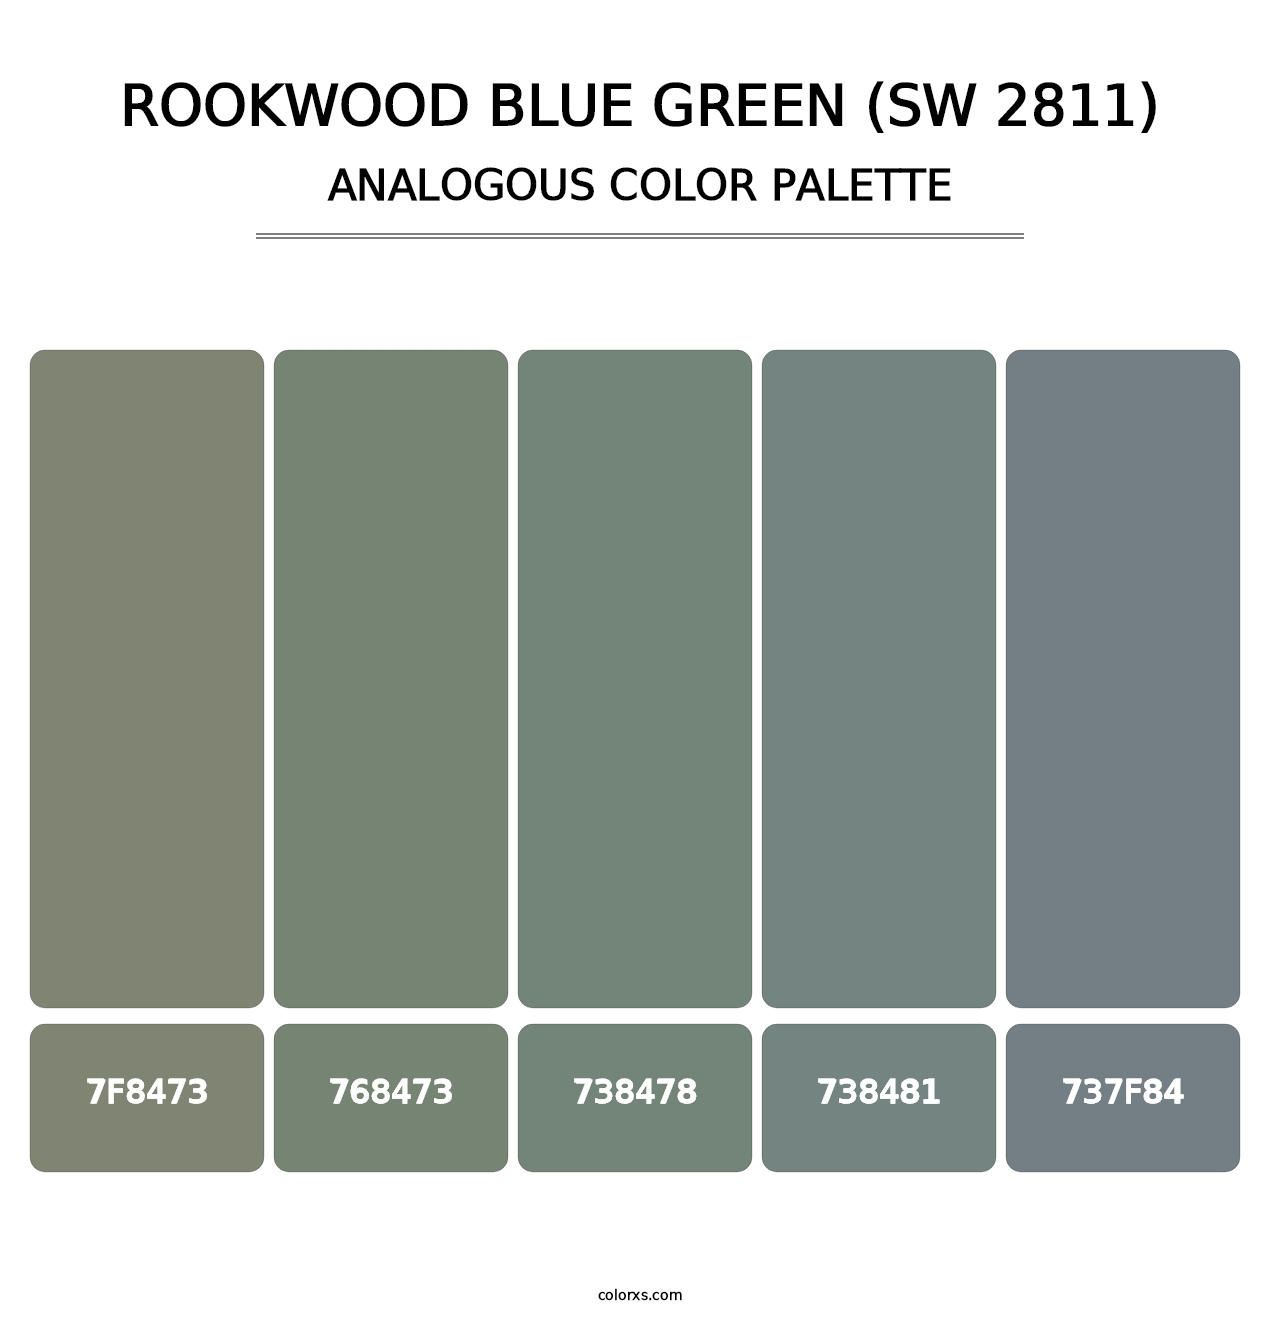 Rookwood Blue Green (SW 2811) - Analogous Color Palette